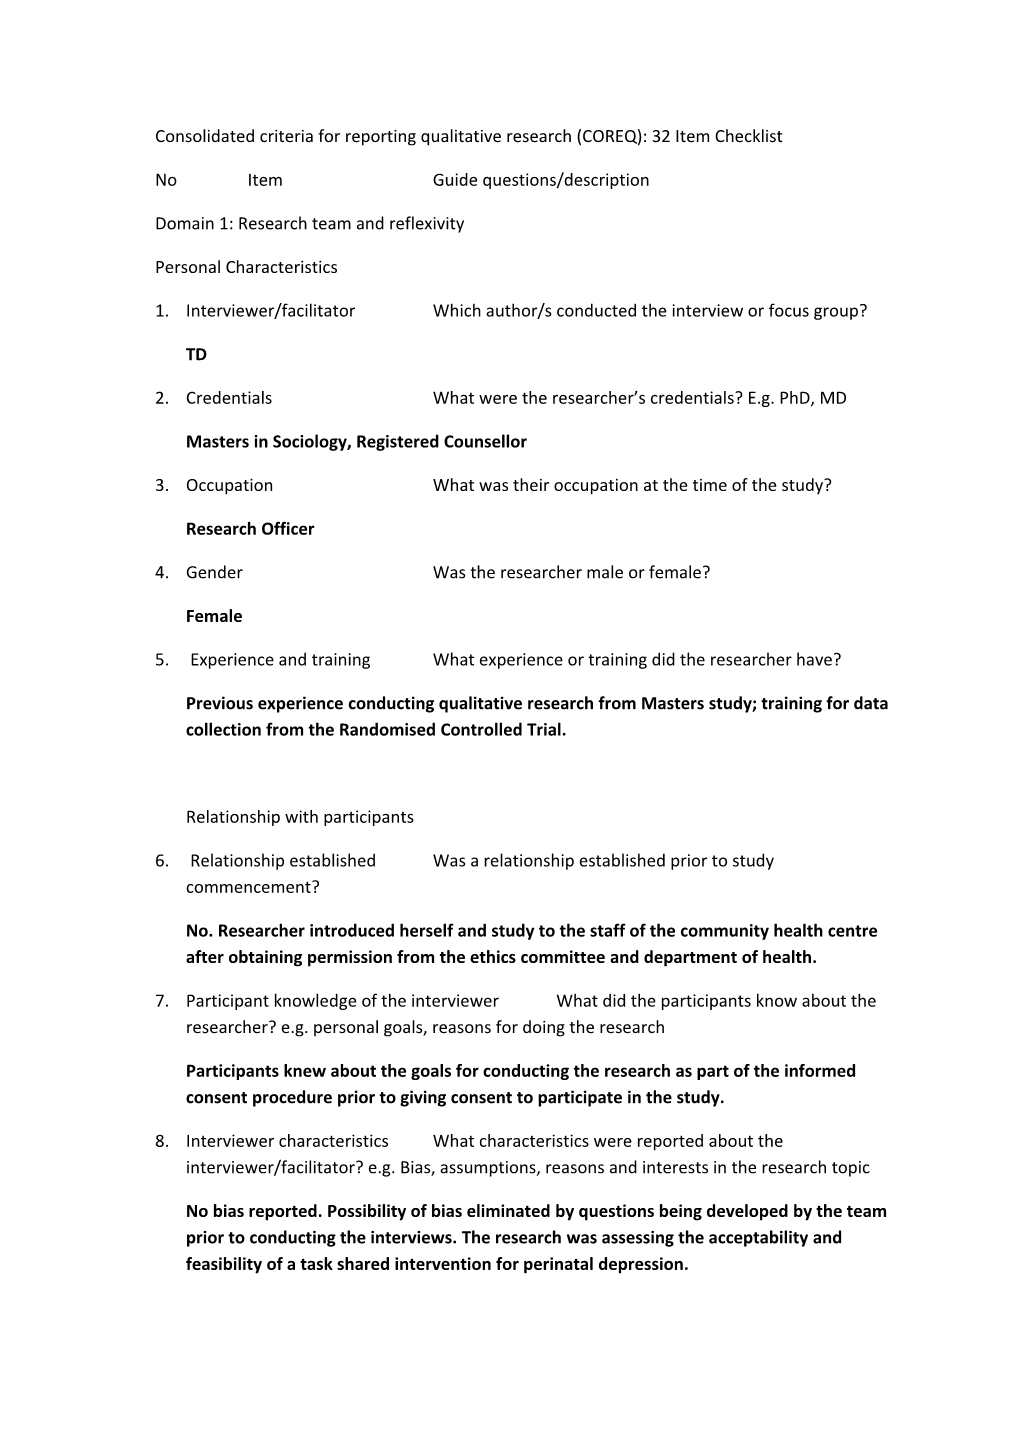 Consolidated Criteria for Reporting Qualitative Research (COREQ): 32 Item Checklist